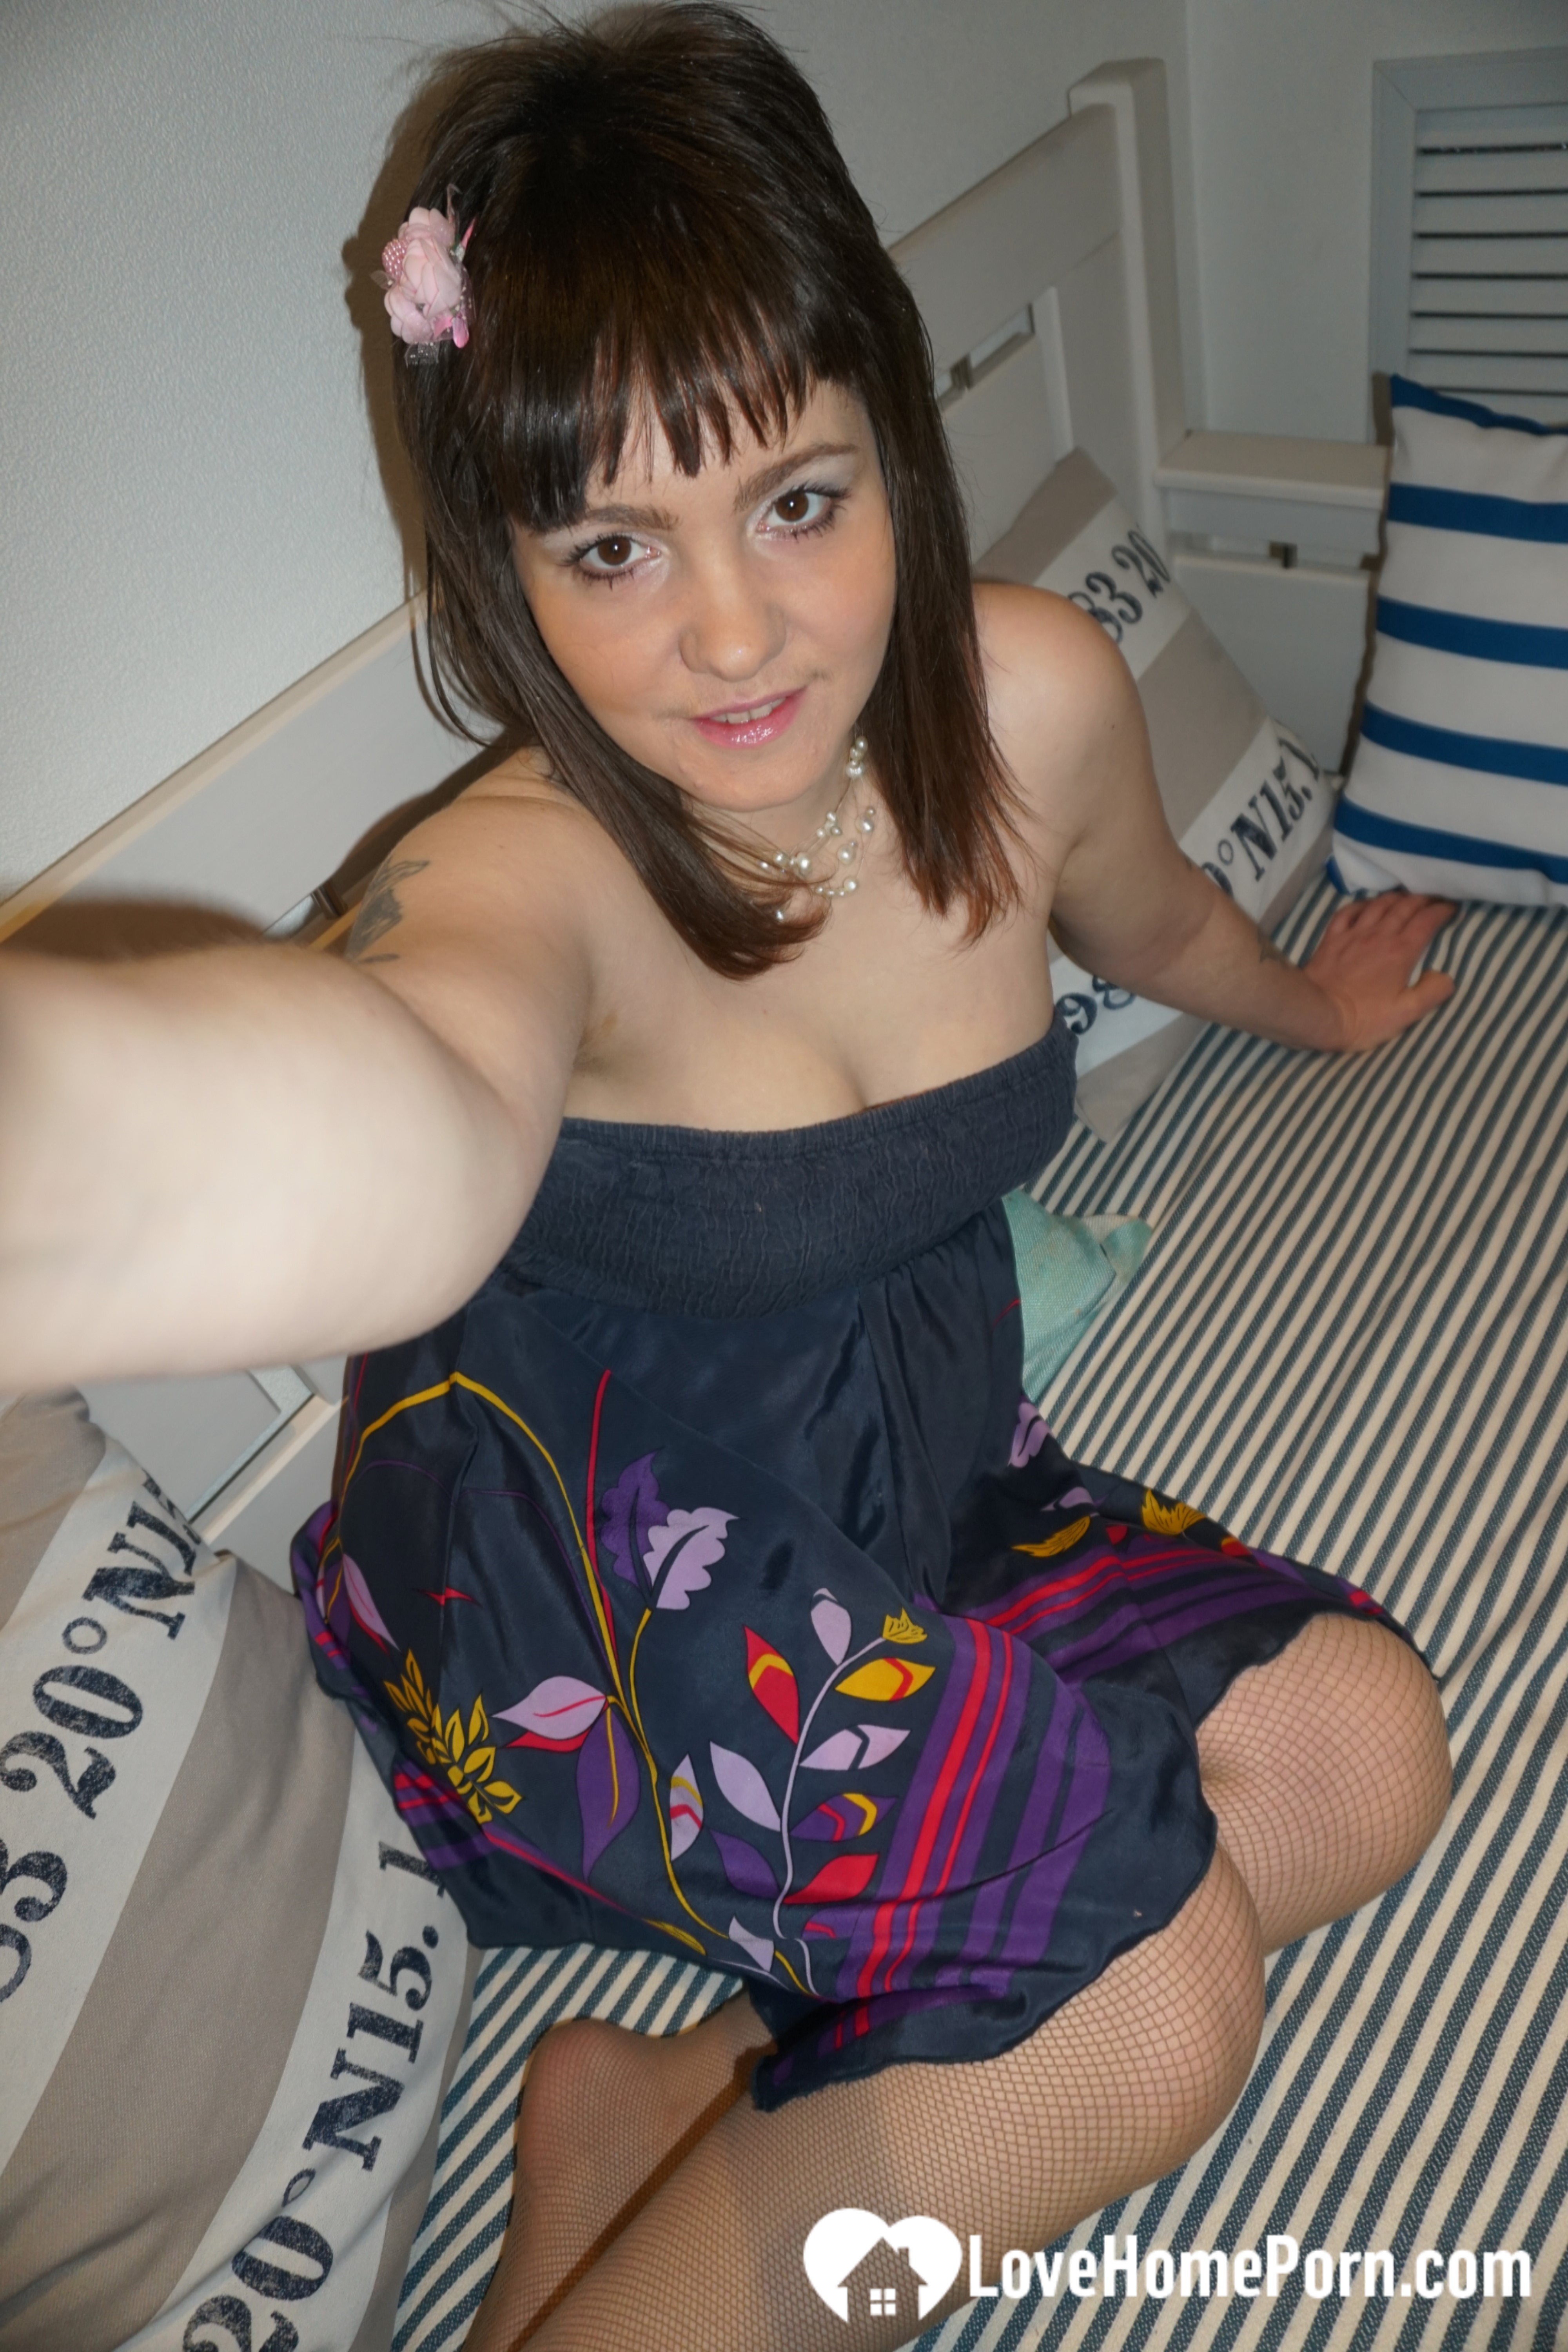 Brunette teen teasing in stockings in the bedroom